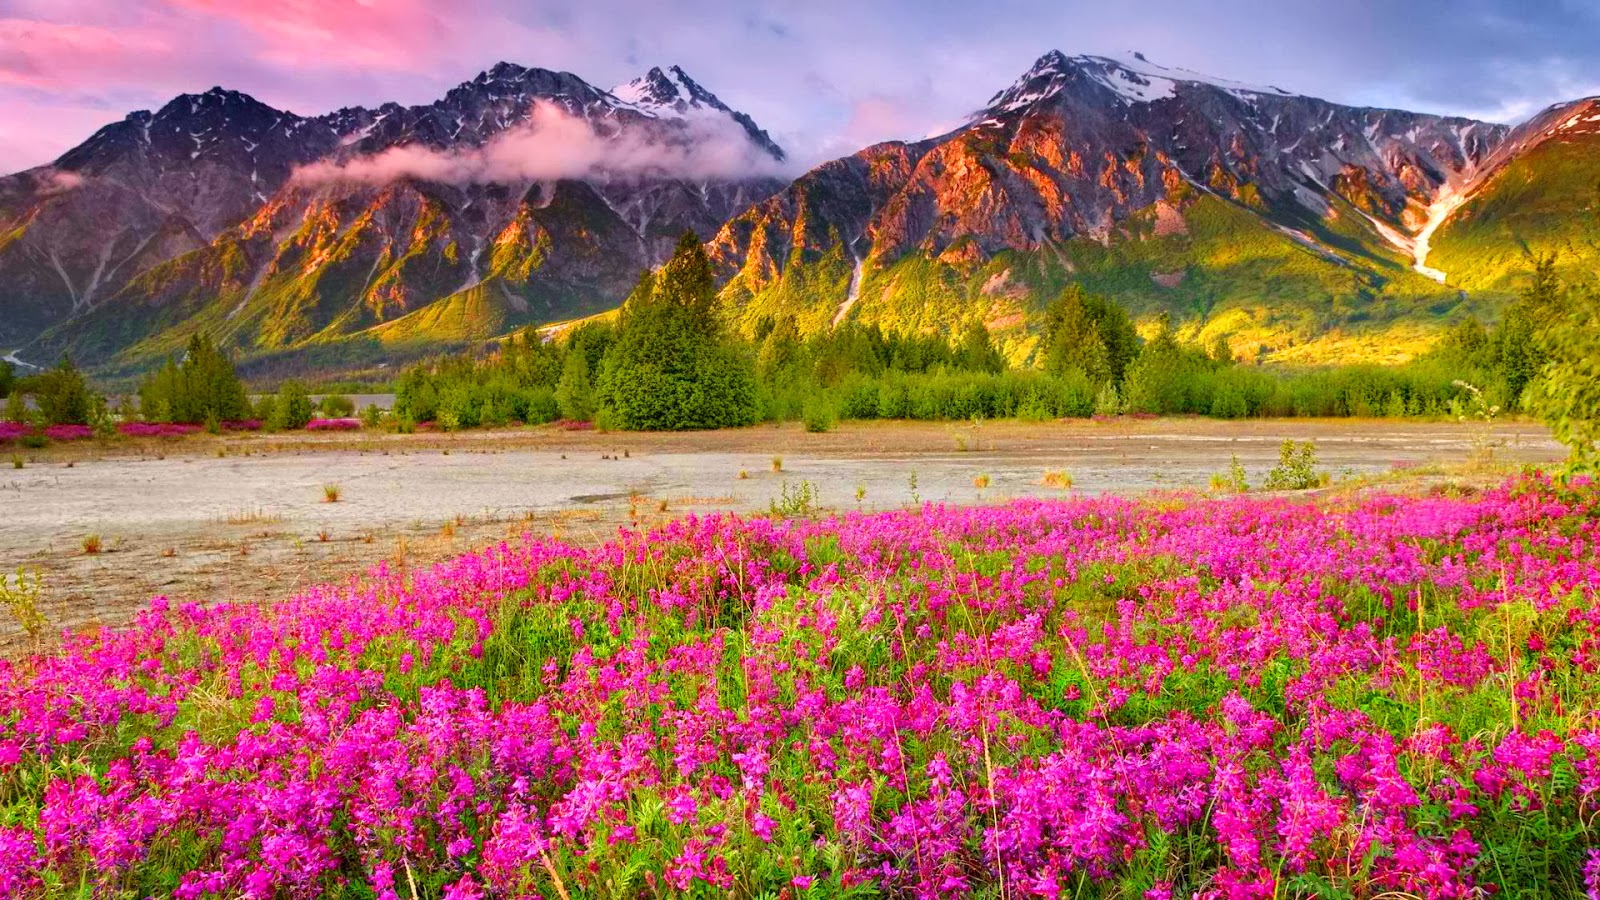 scenery wallpaper hd free download,natural landscape,nature,mountainous landforms,wilderness,flower